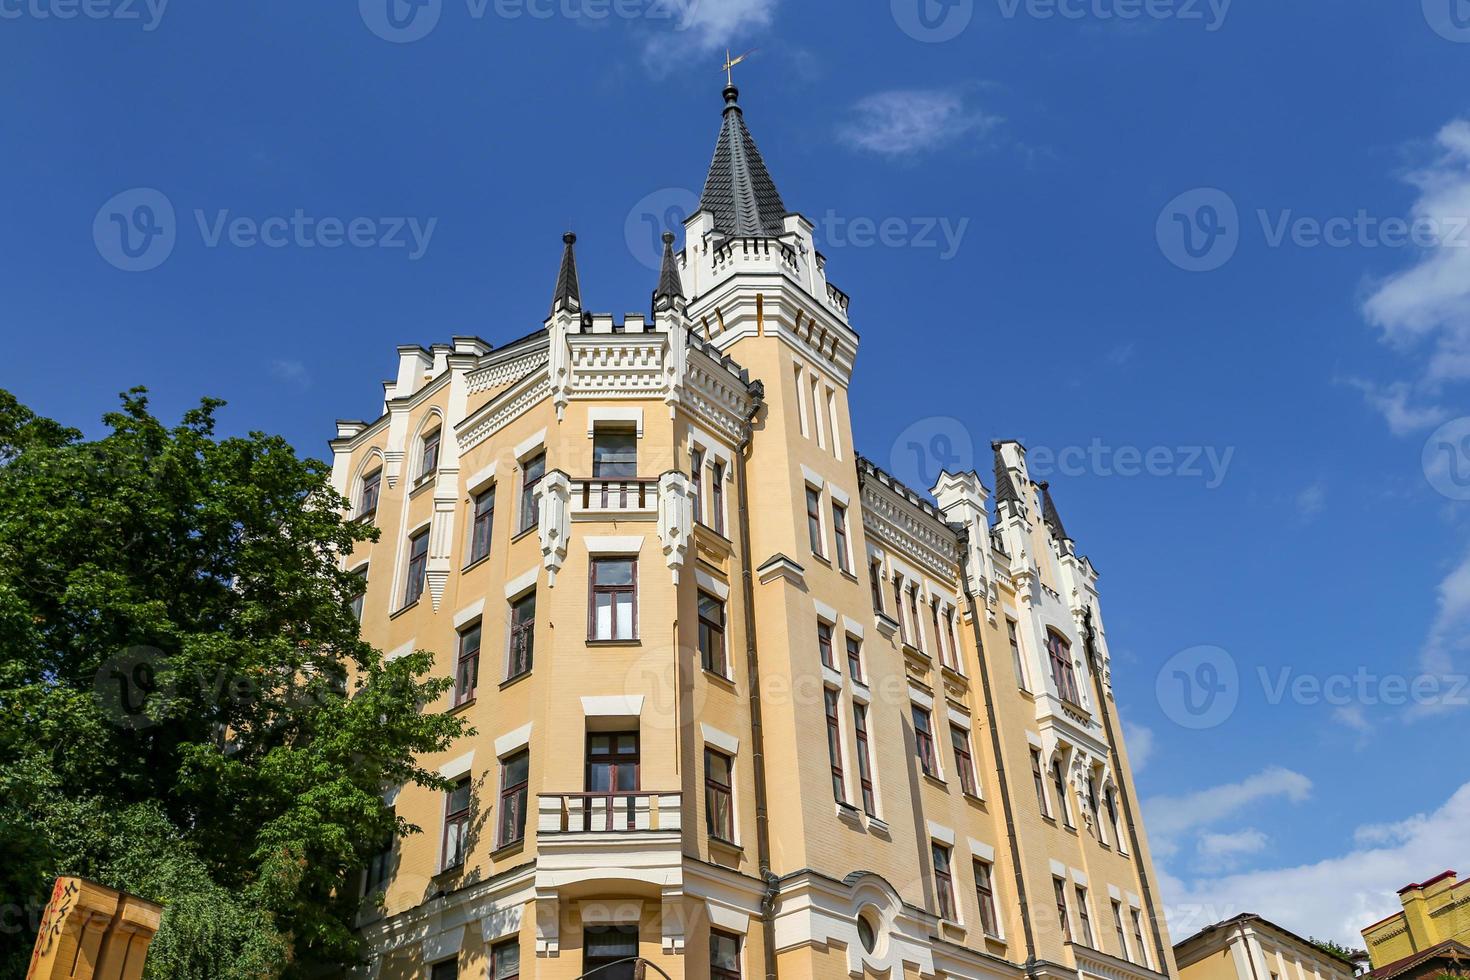 Castle of Richard Lionheart in Kiev, Ukraine photo